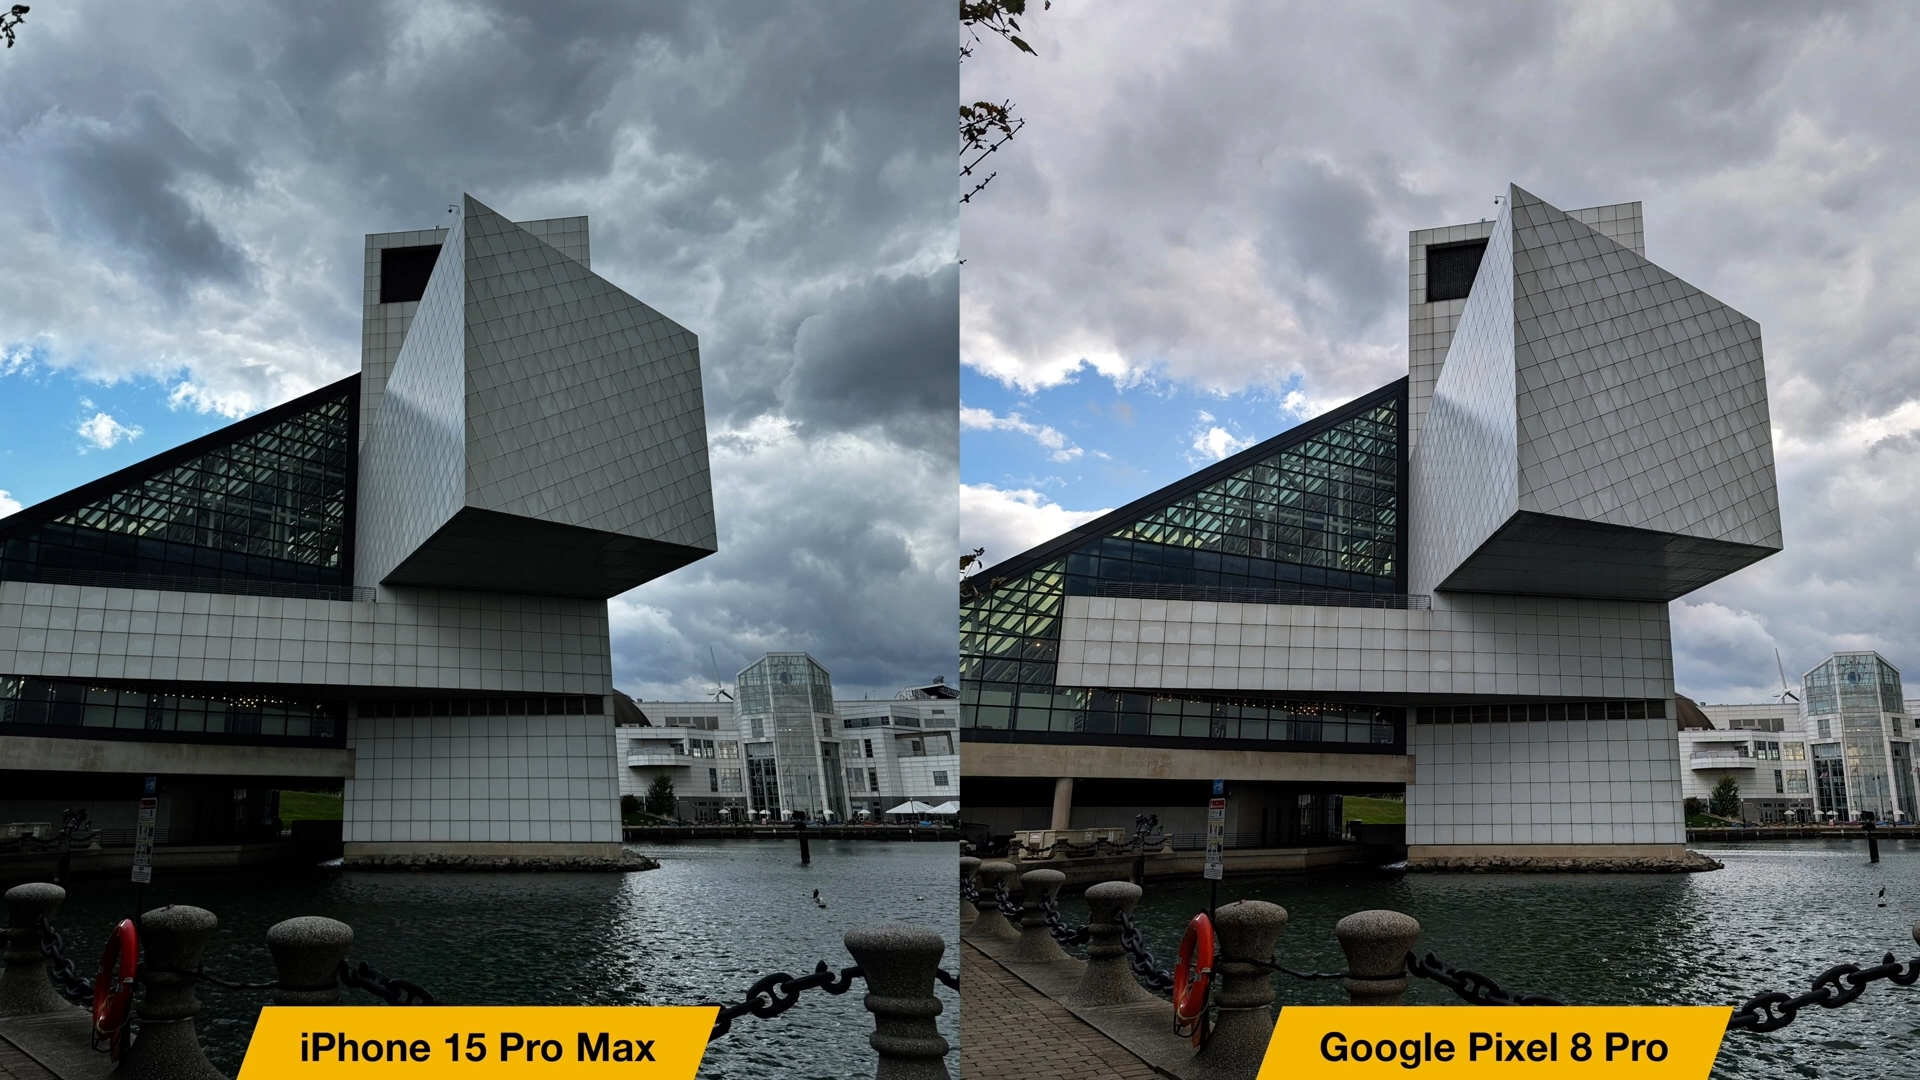 Từ iPhoneIslam.com, bài so sánh giữa camera của iPhone 15 Pro Max và camera của Google Pixel 8 Pro.